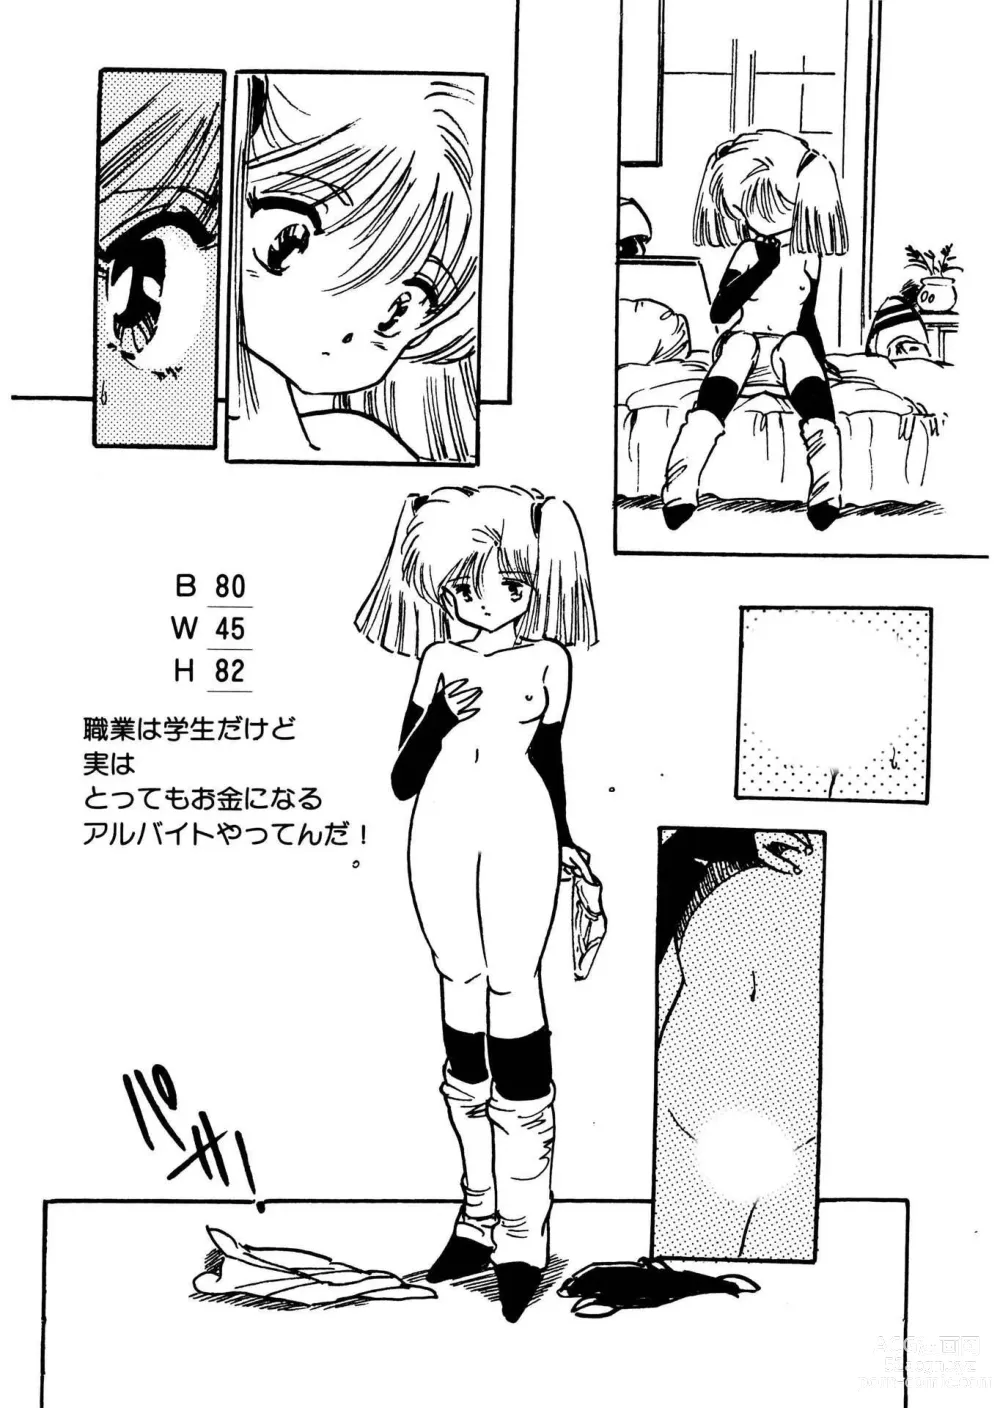 Page 10 of manga Bijo Hime Jigoku